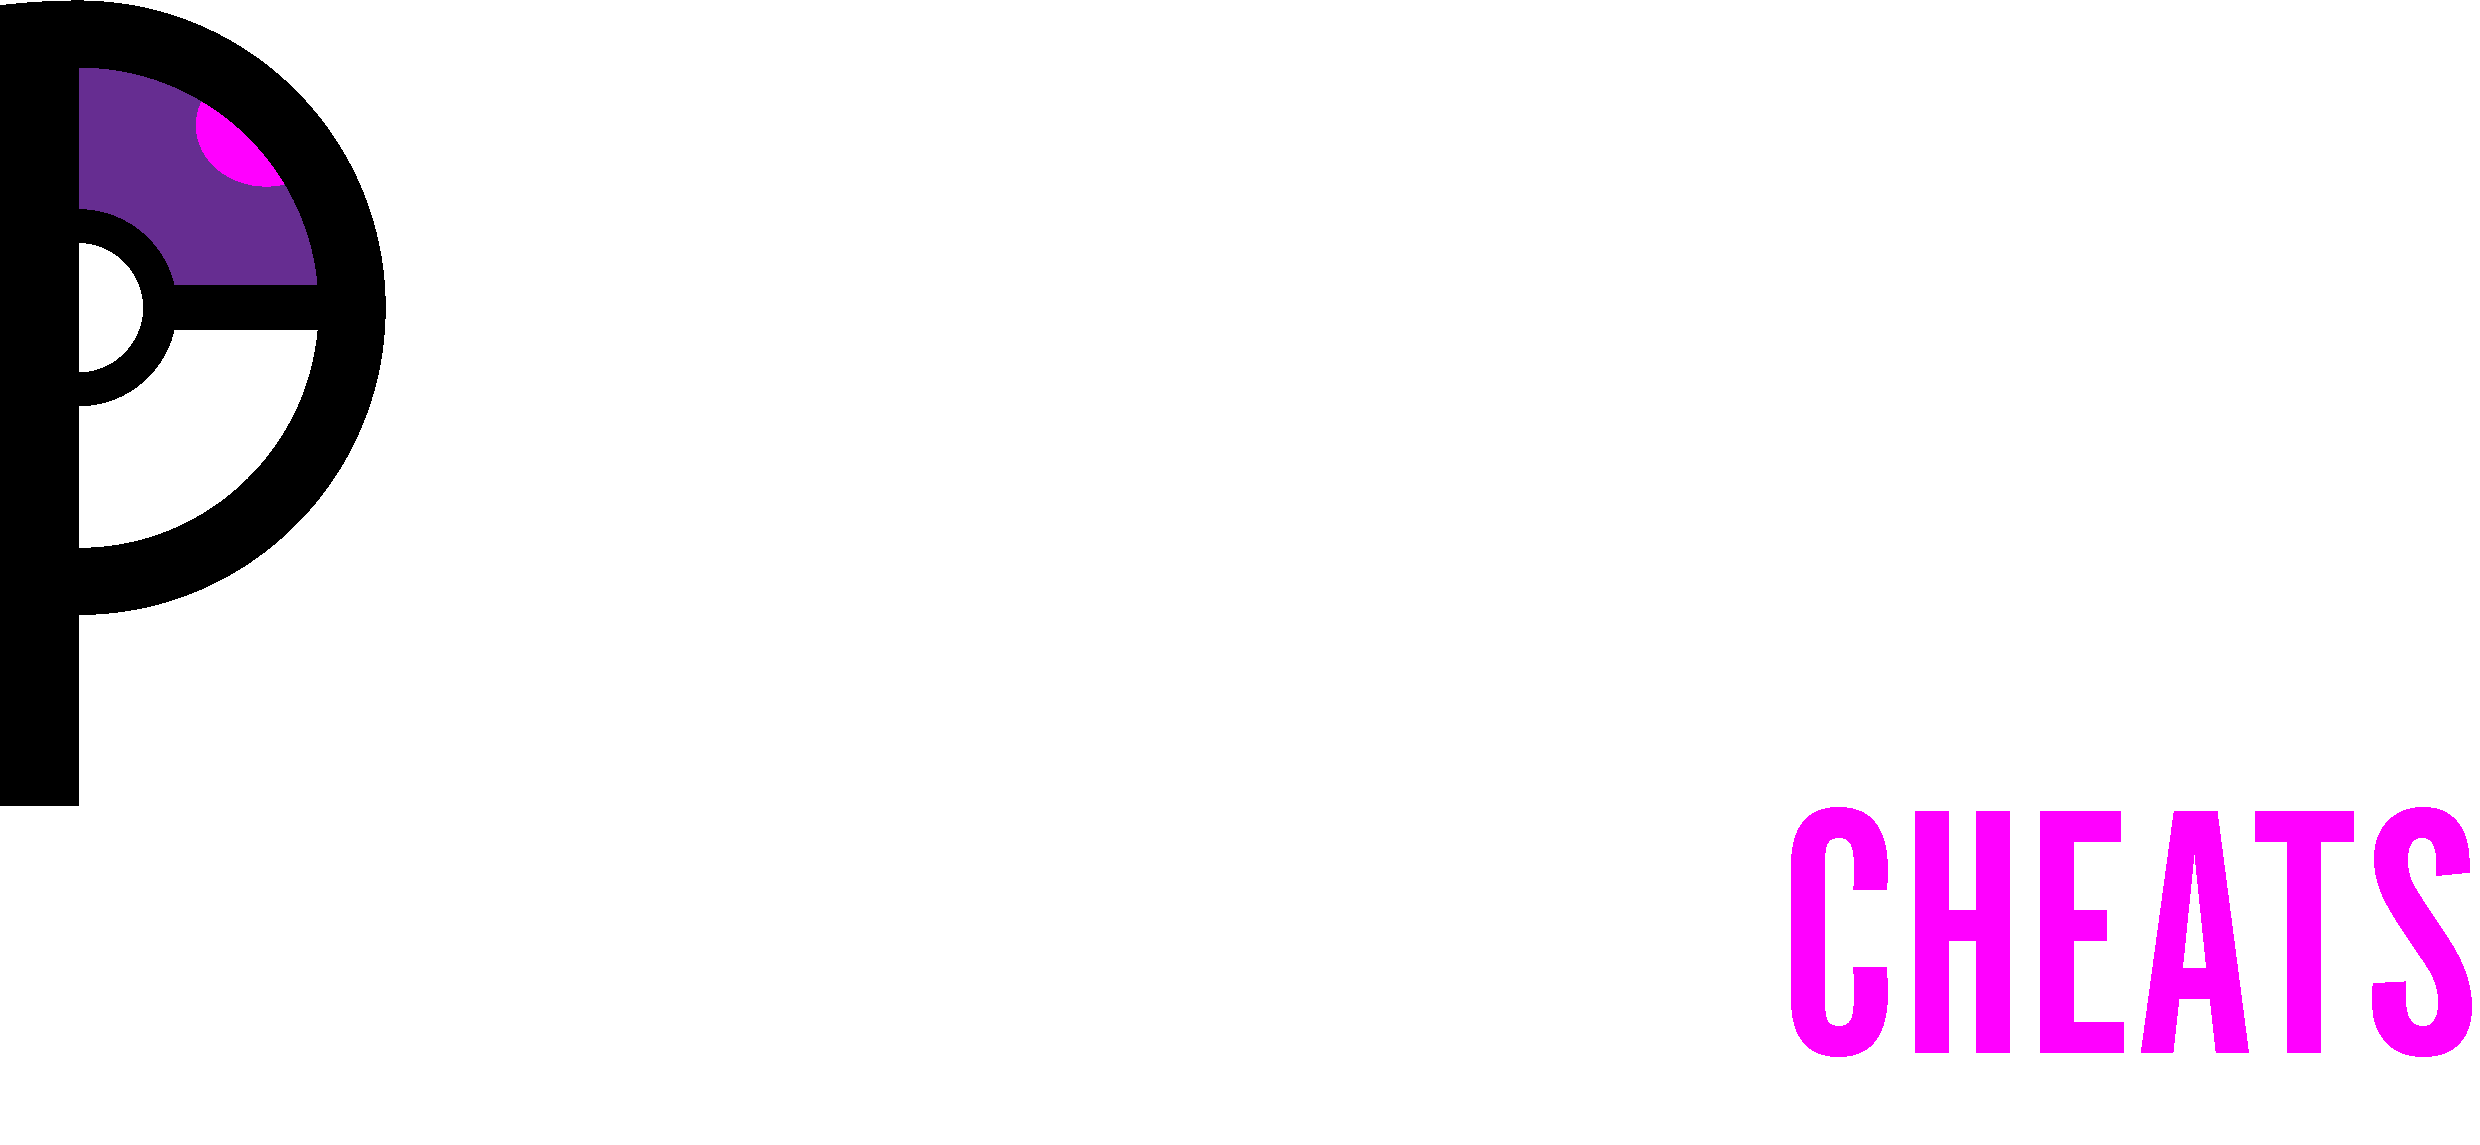 PkMoncheats | pokemon games cheats